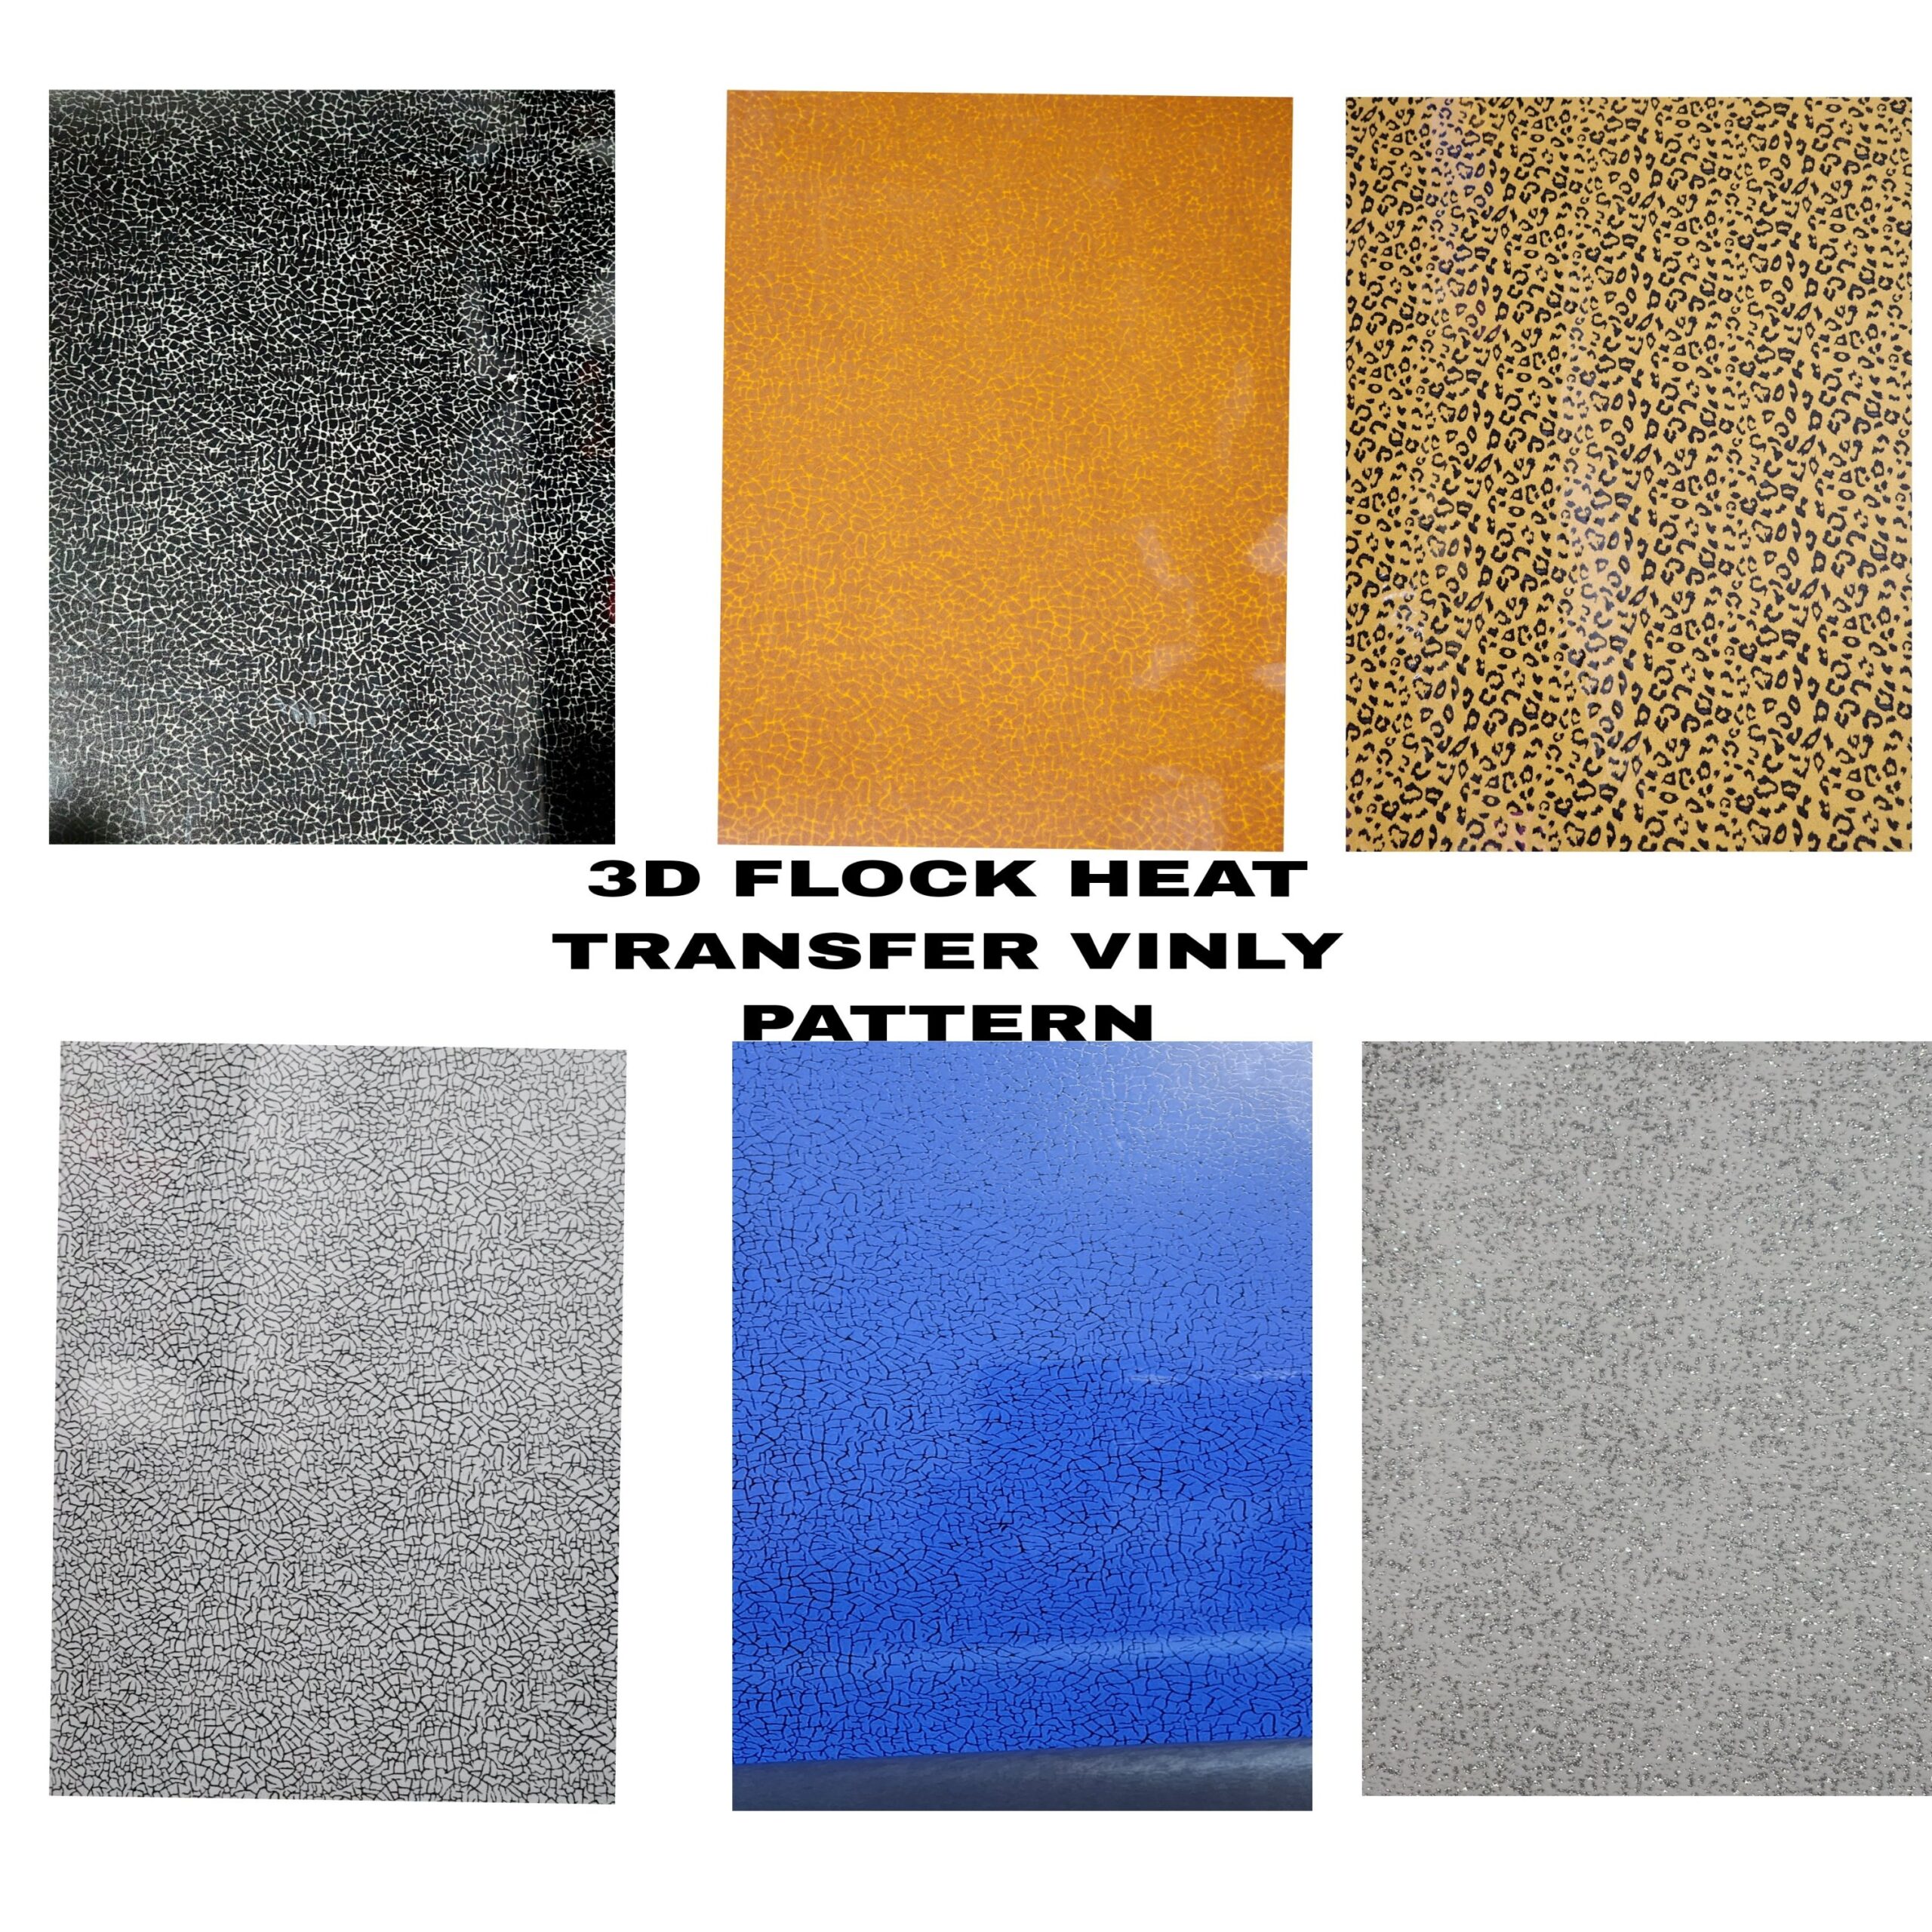 Free Sample Iron On Transfer Vinyl 3d Flock Heat Transfer Vinyl